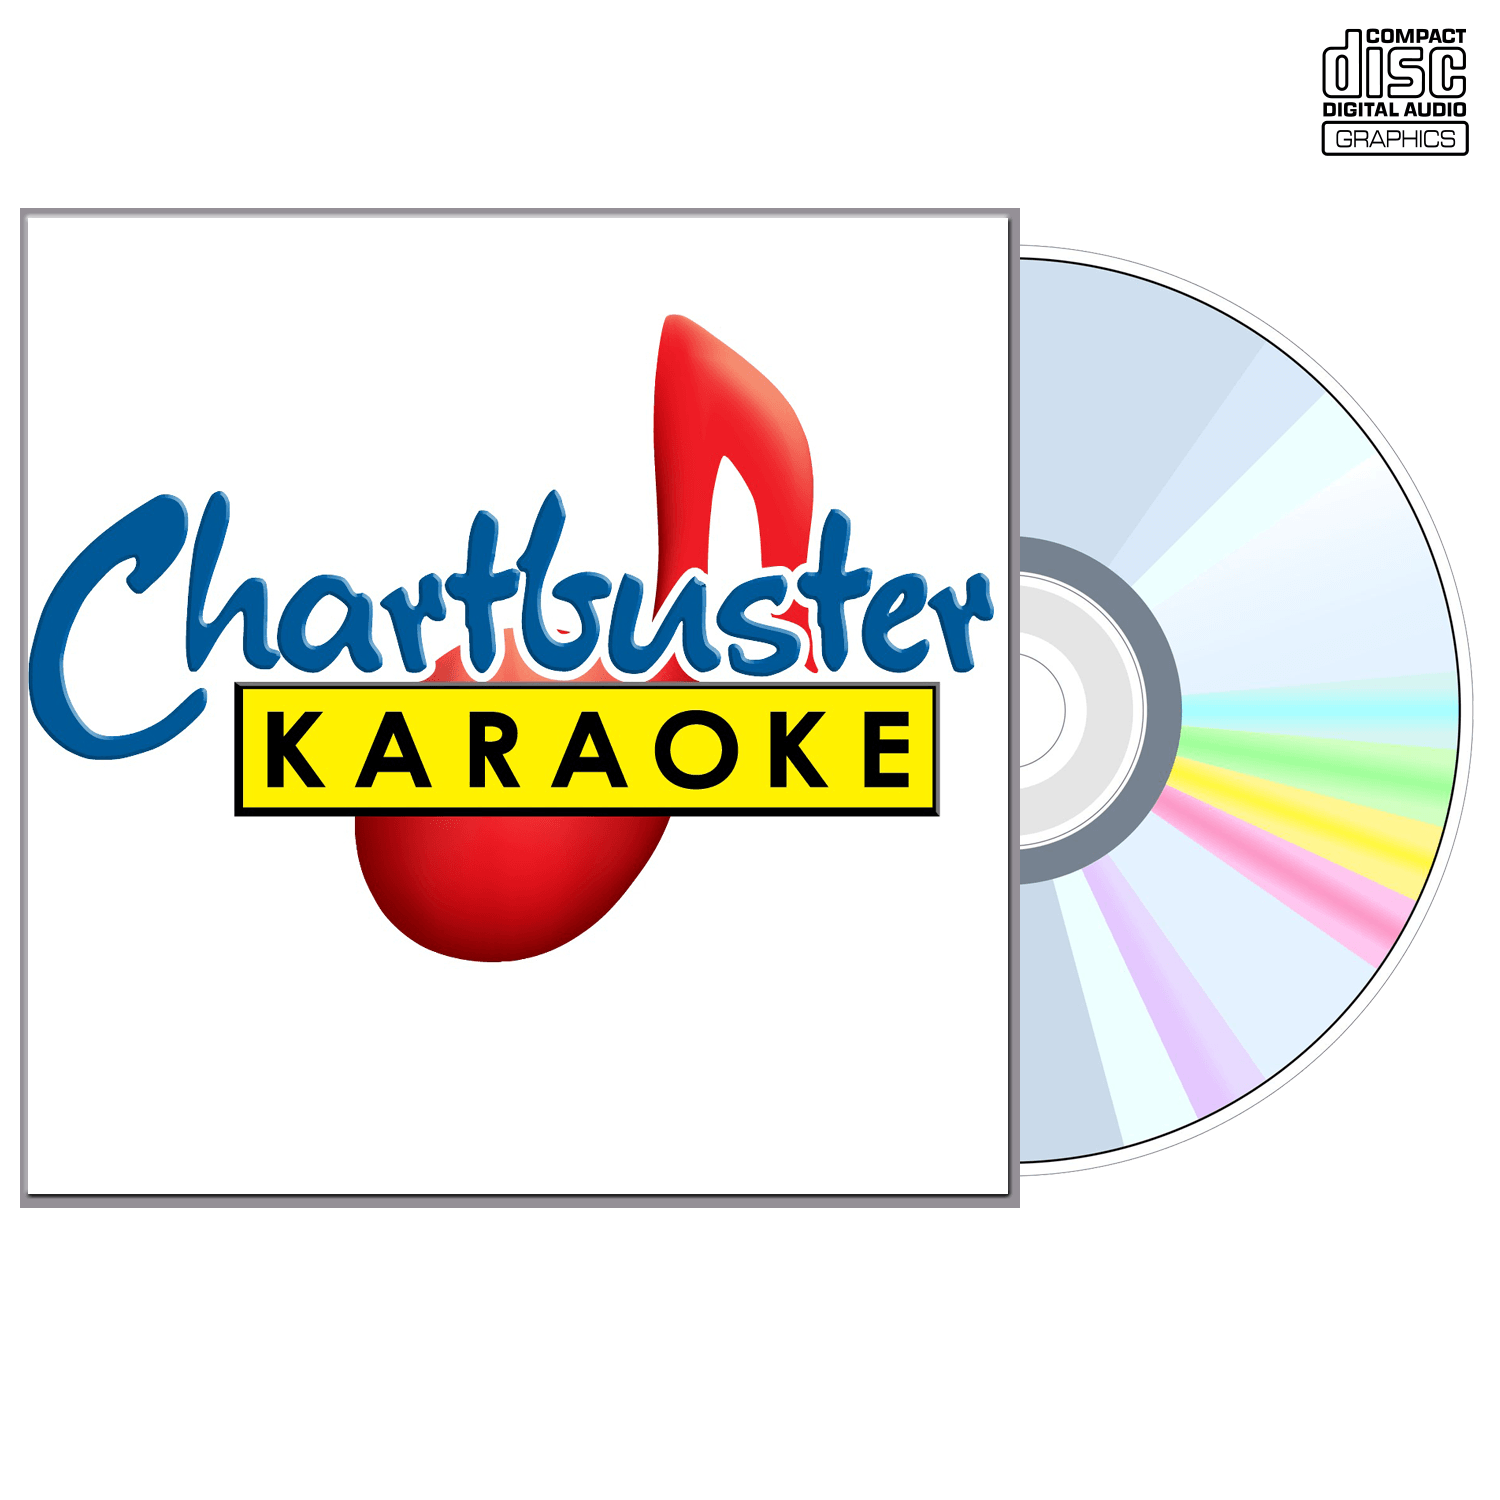 70's Collection Vol 13 - CD+G - Chartbuster Karaoke - Karaoke Home Entertainment